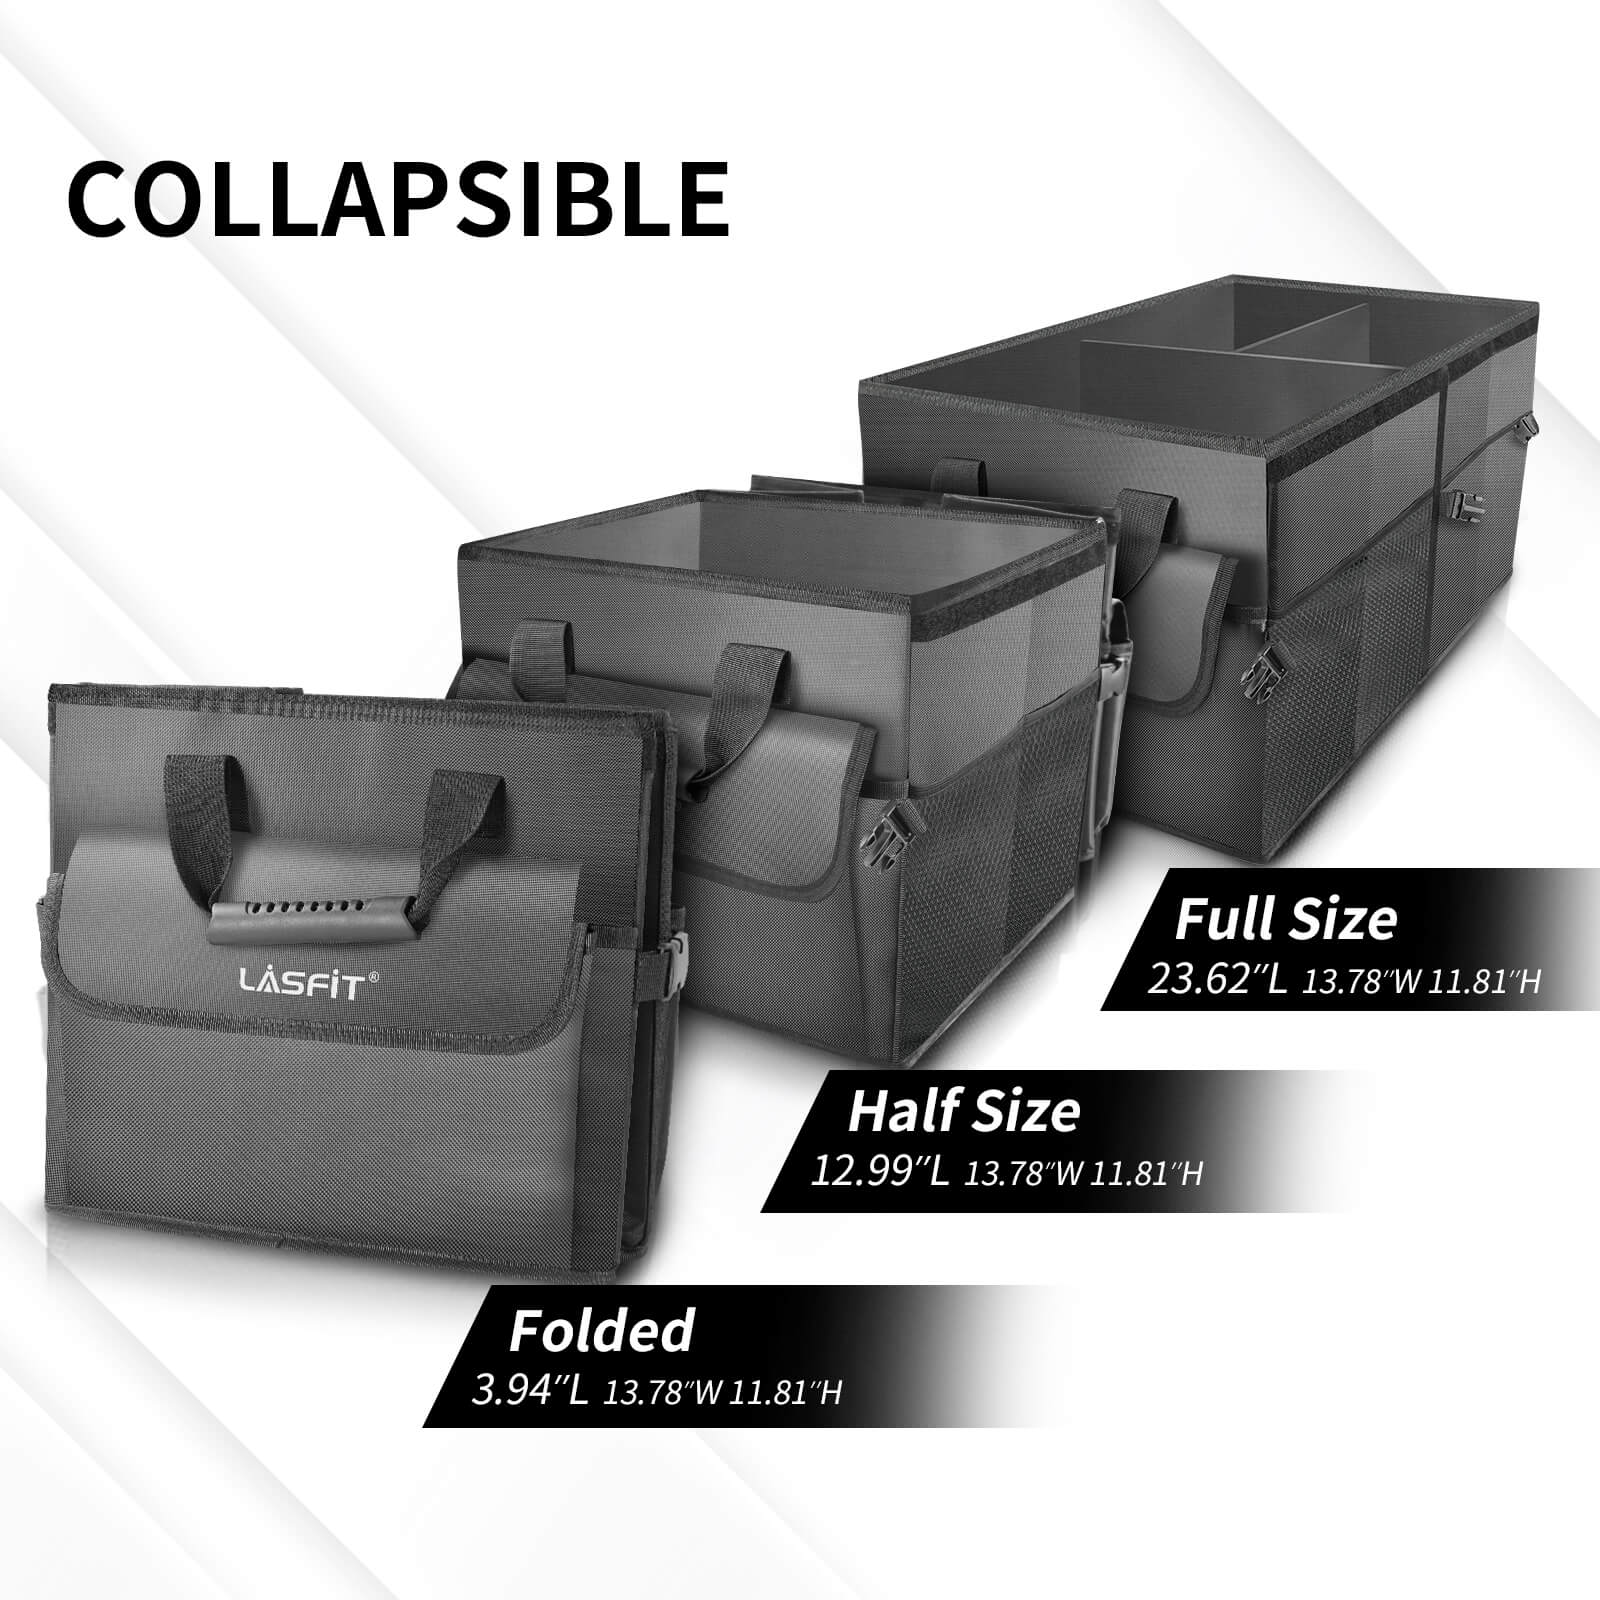 Lasfit Collapsible Multi-Compartment Car Truck Organizer w/ Adjustable Straps